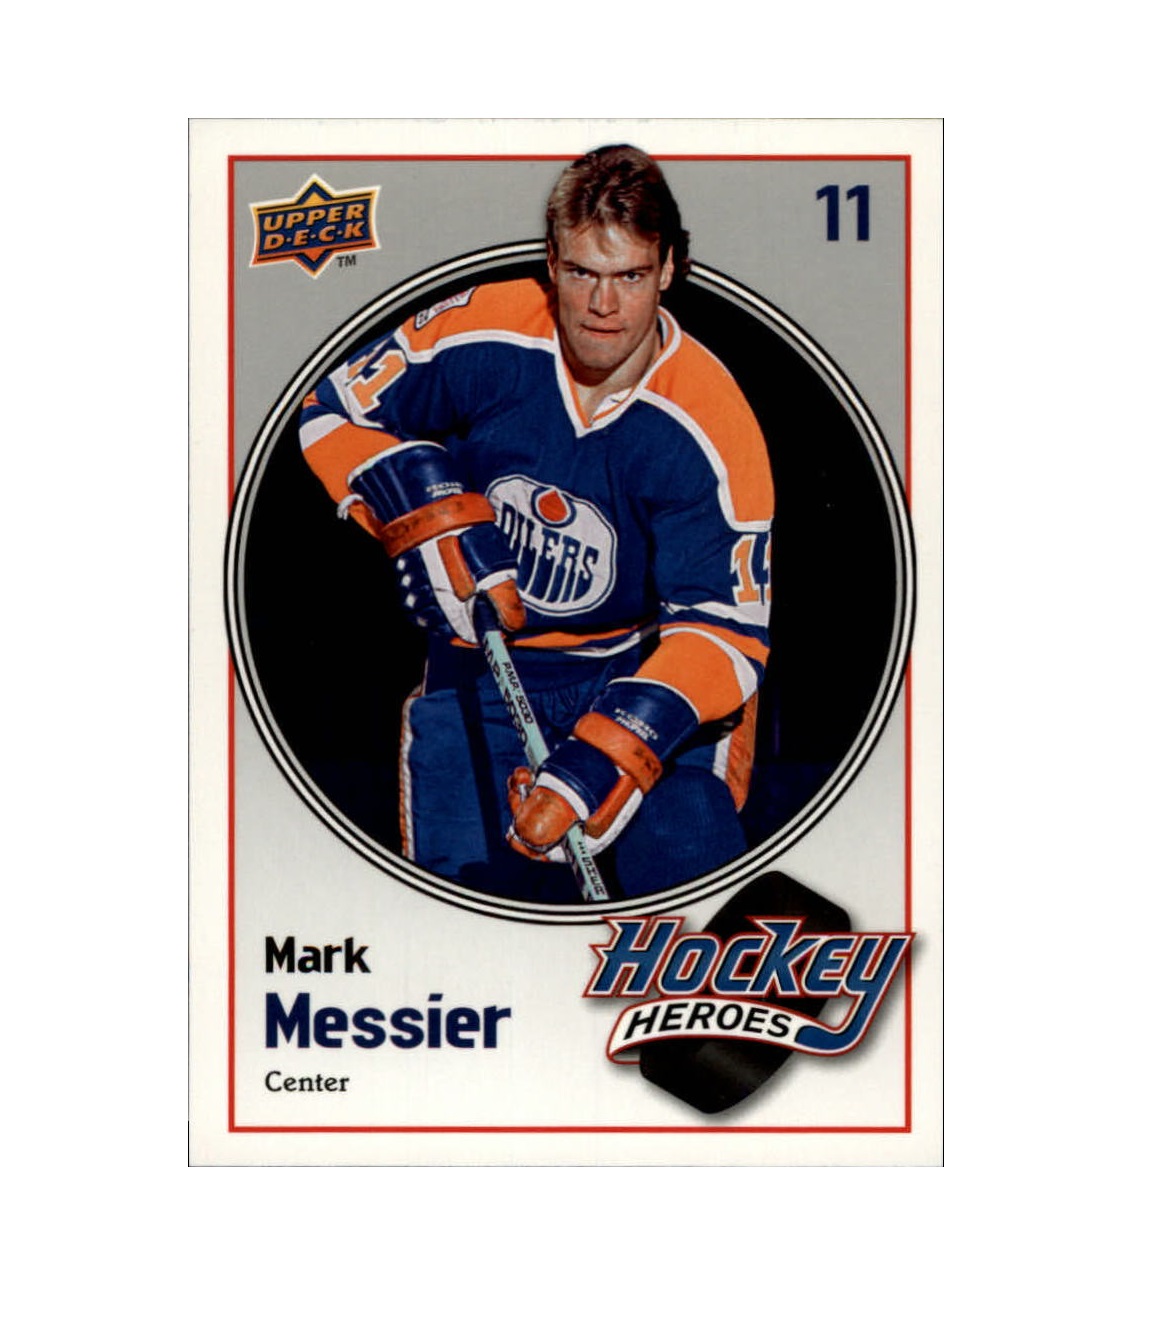 2009-10 Upper Deck Hockey Heroes Mark Messier #HH19 Mark Messier (25-X161-OILERS)